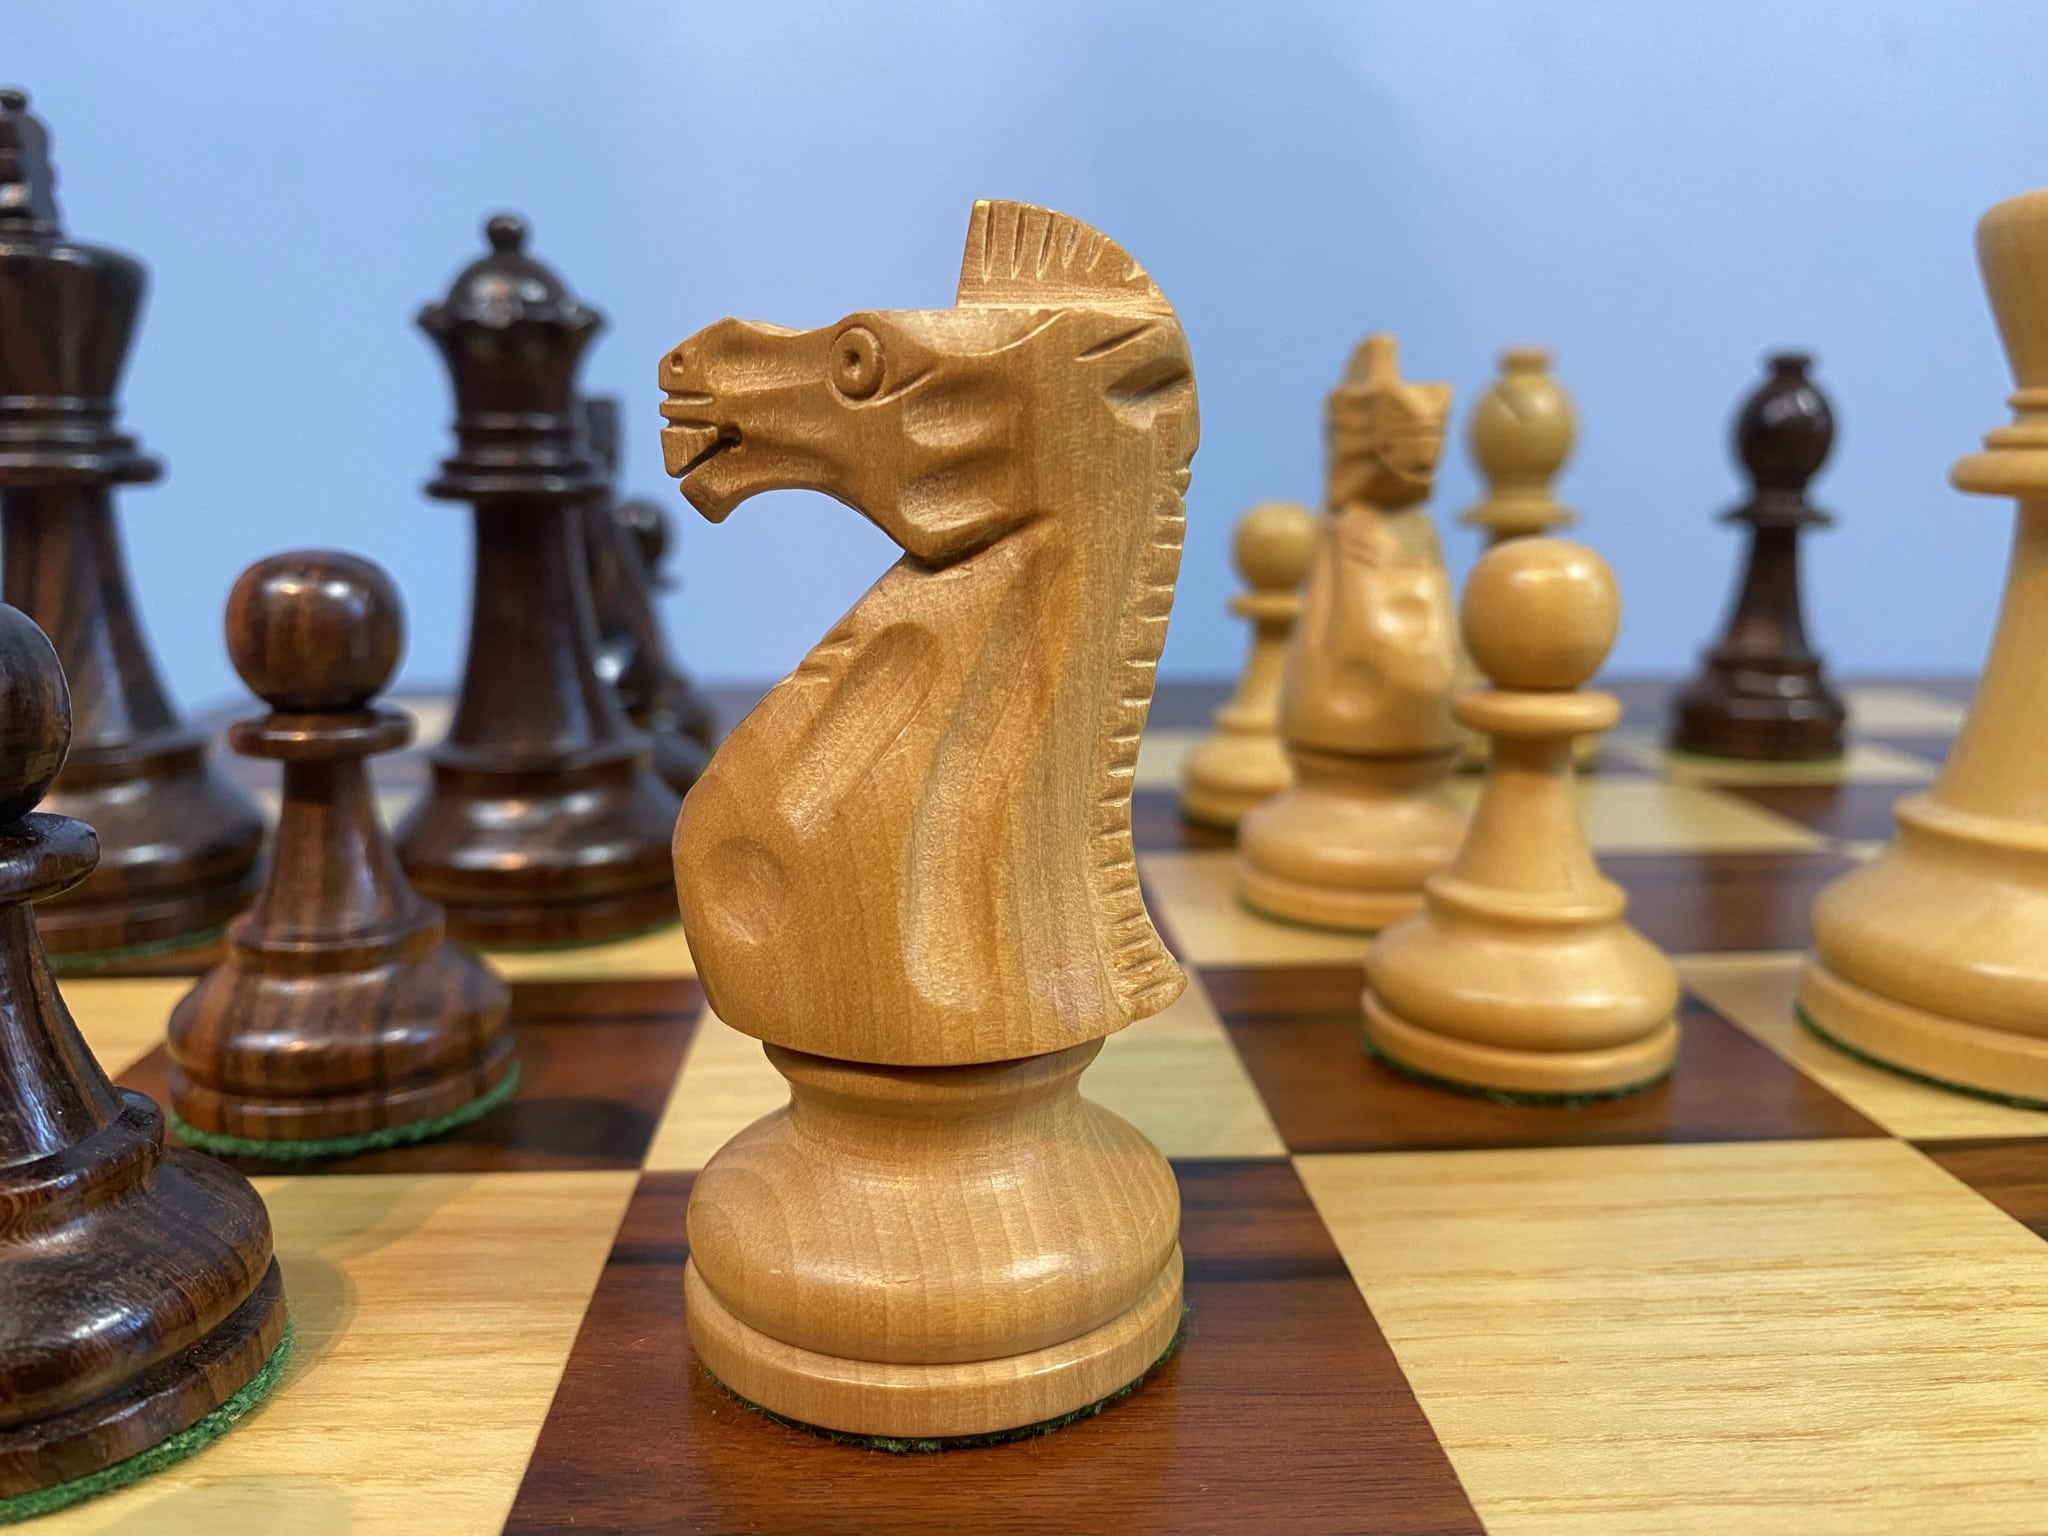 kasparov chess trainer